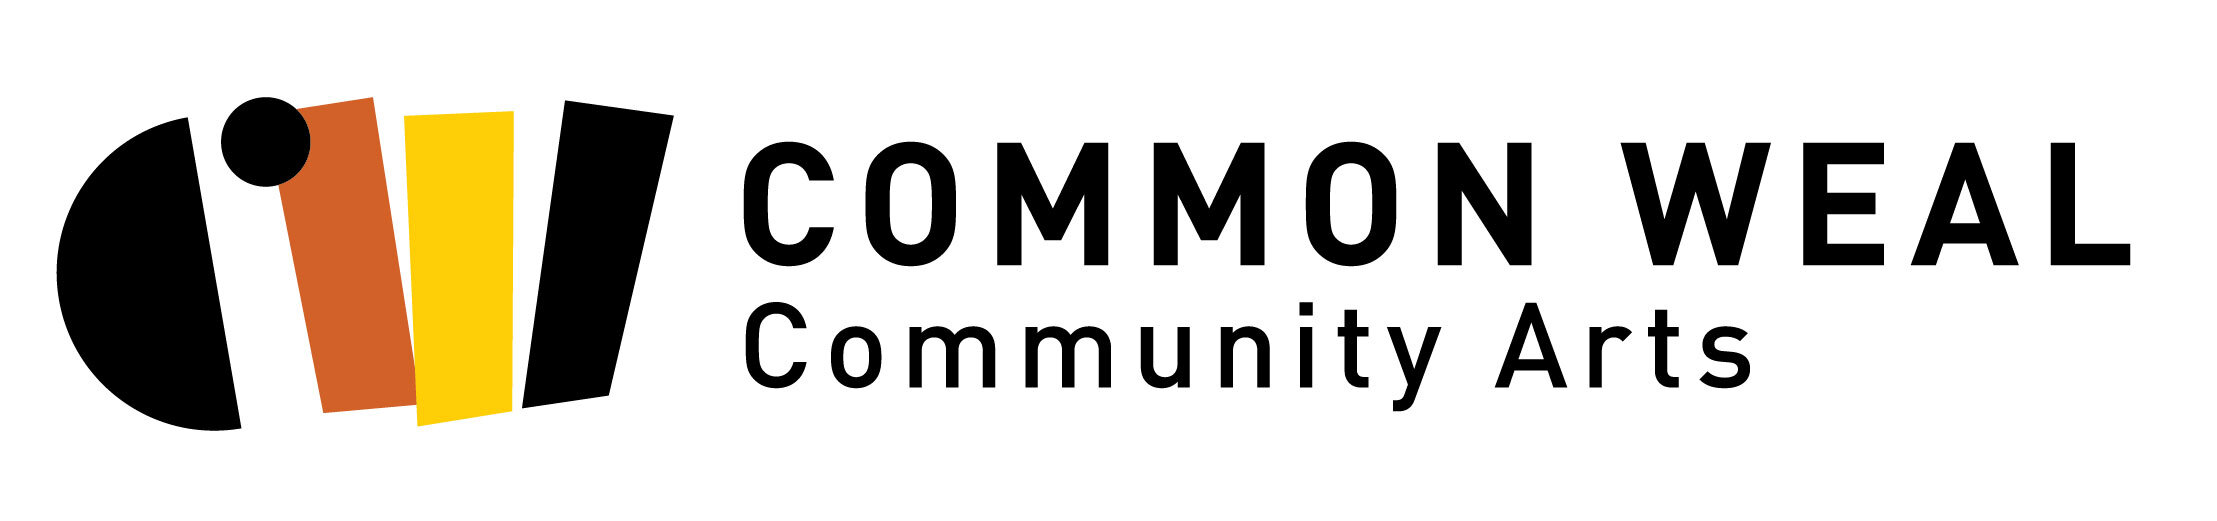 Common Weal Community Arts